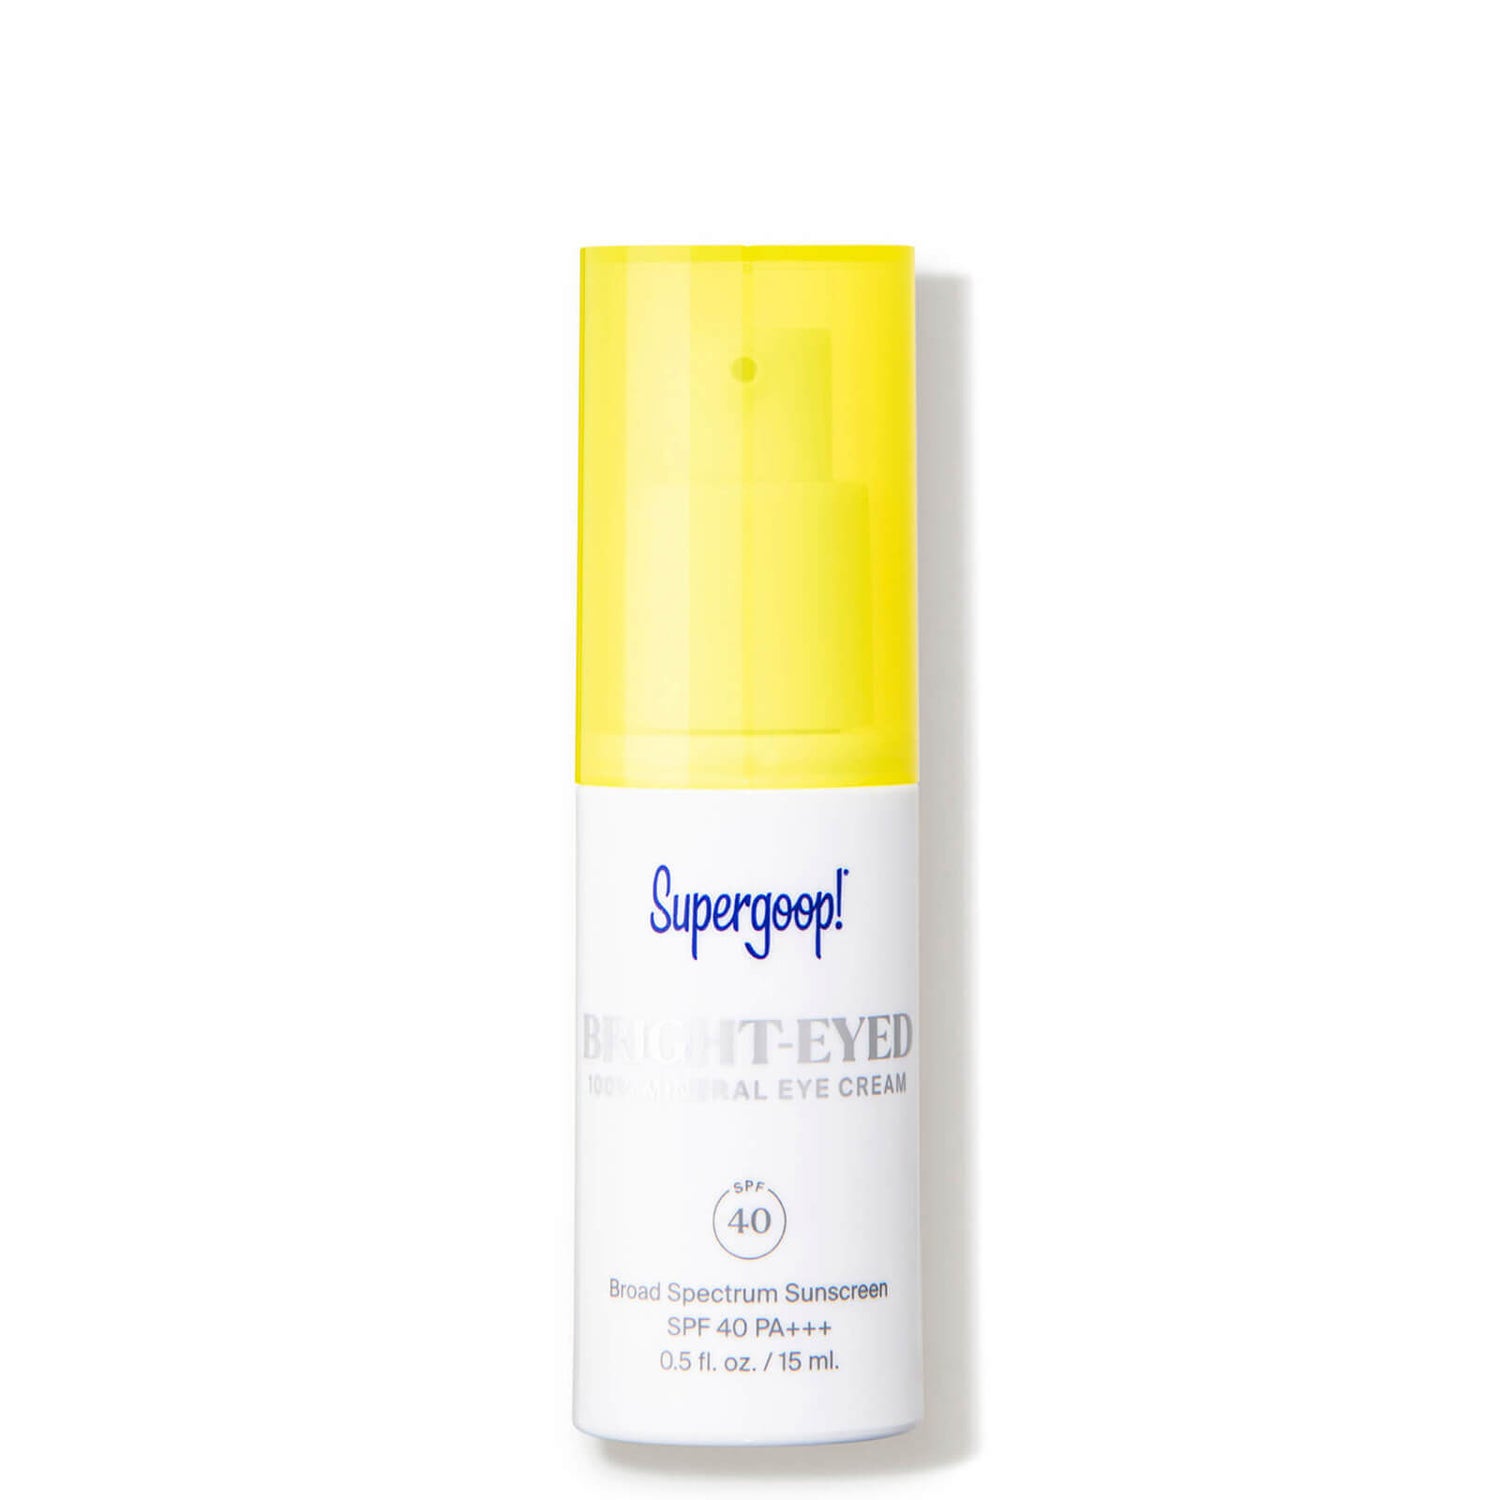 Supergoop!® Bright-Eyed 100 Mineral Eye Cream SPF 40 0.5 fl. oz.